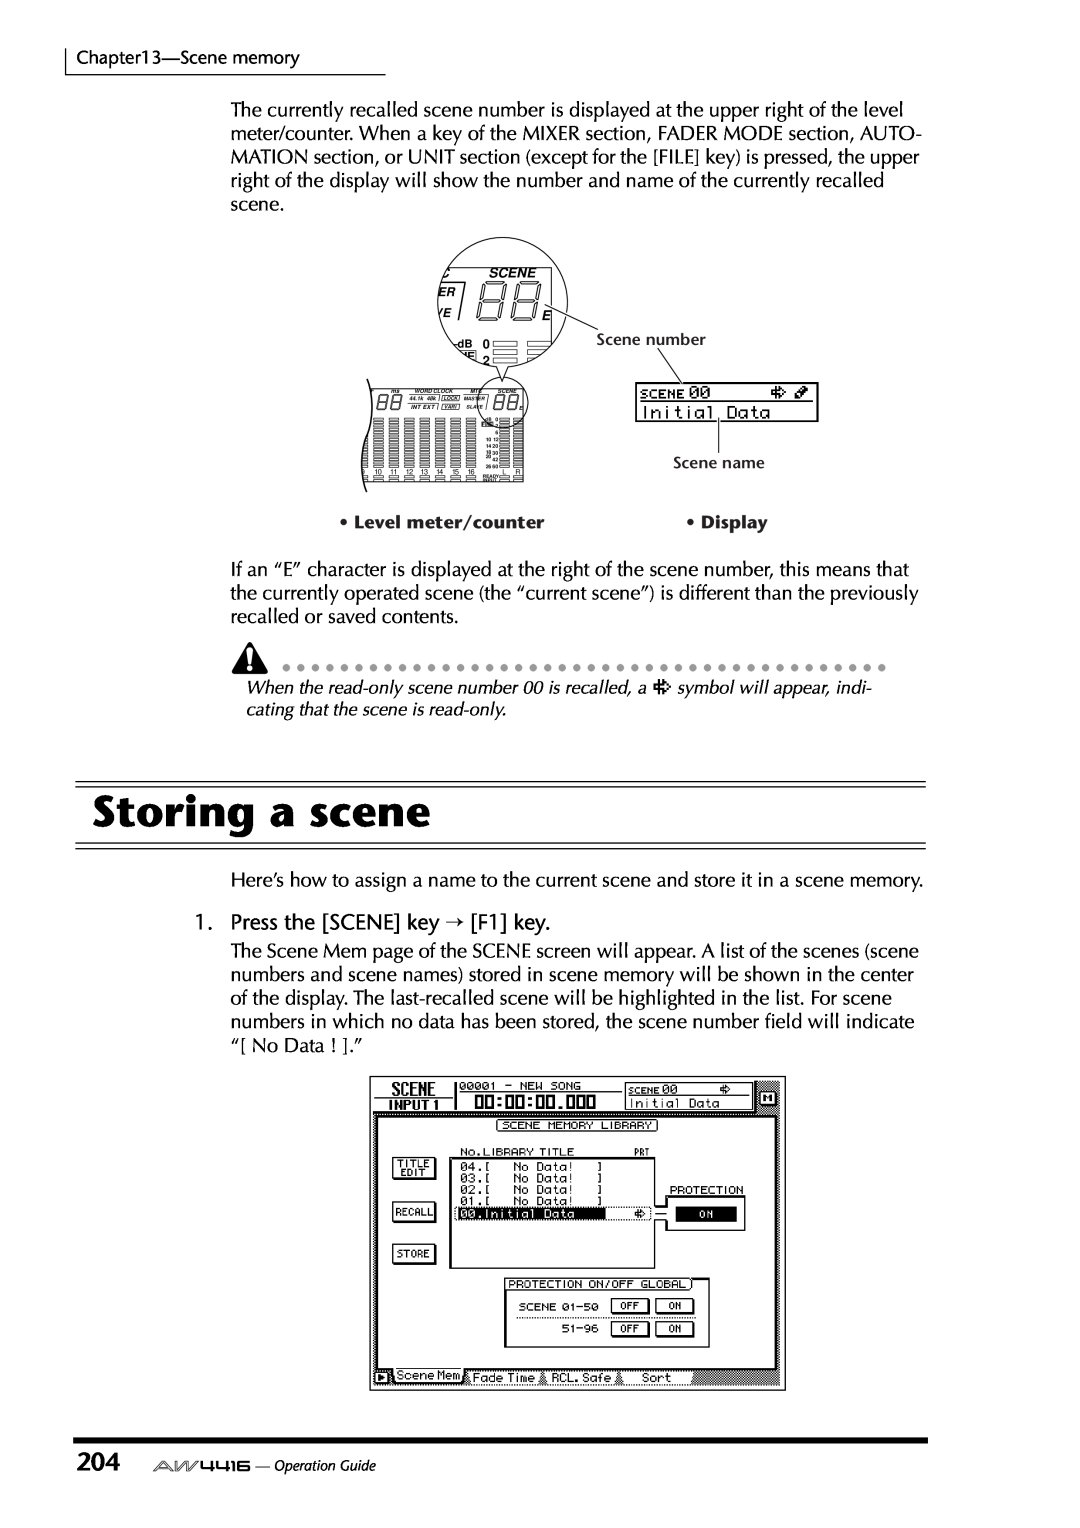 Yamaha AW4416 manual Storing a scene, Press the SCENE key → F1 key 